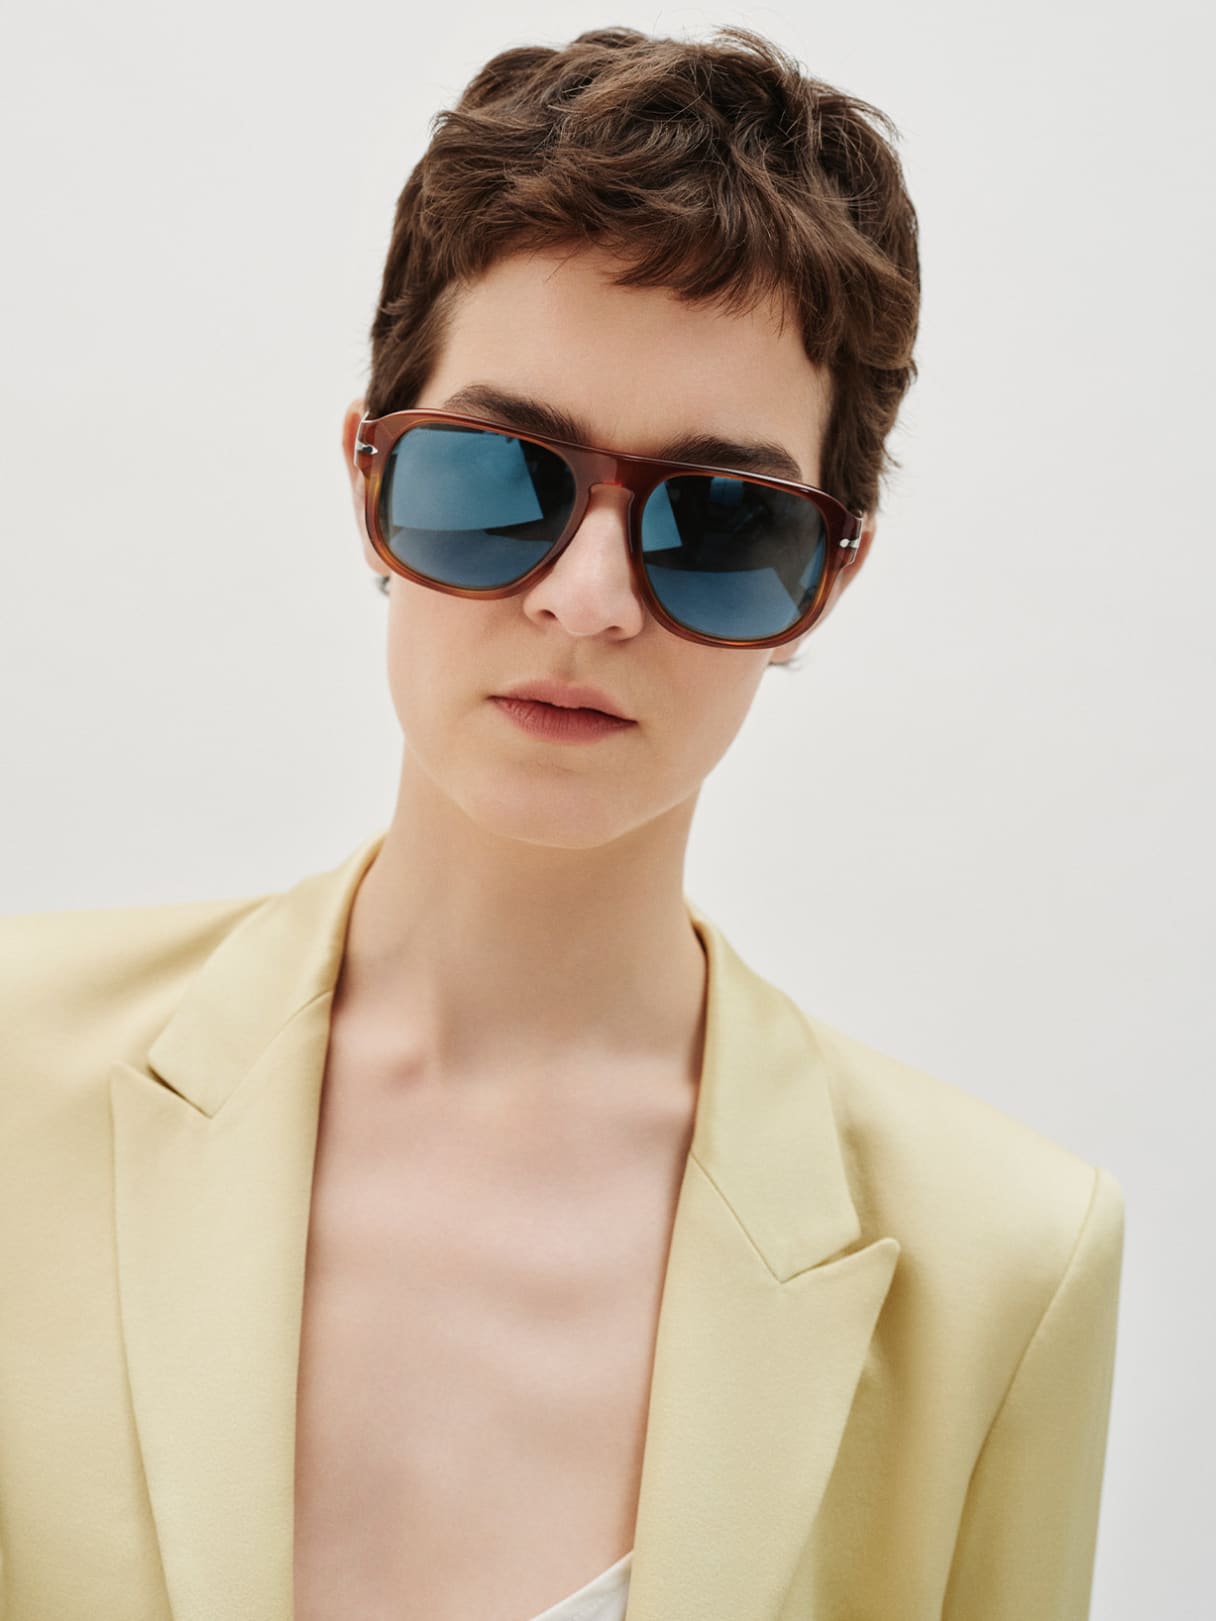 Female Model wearing sunglasses